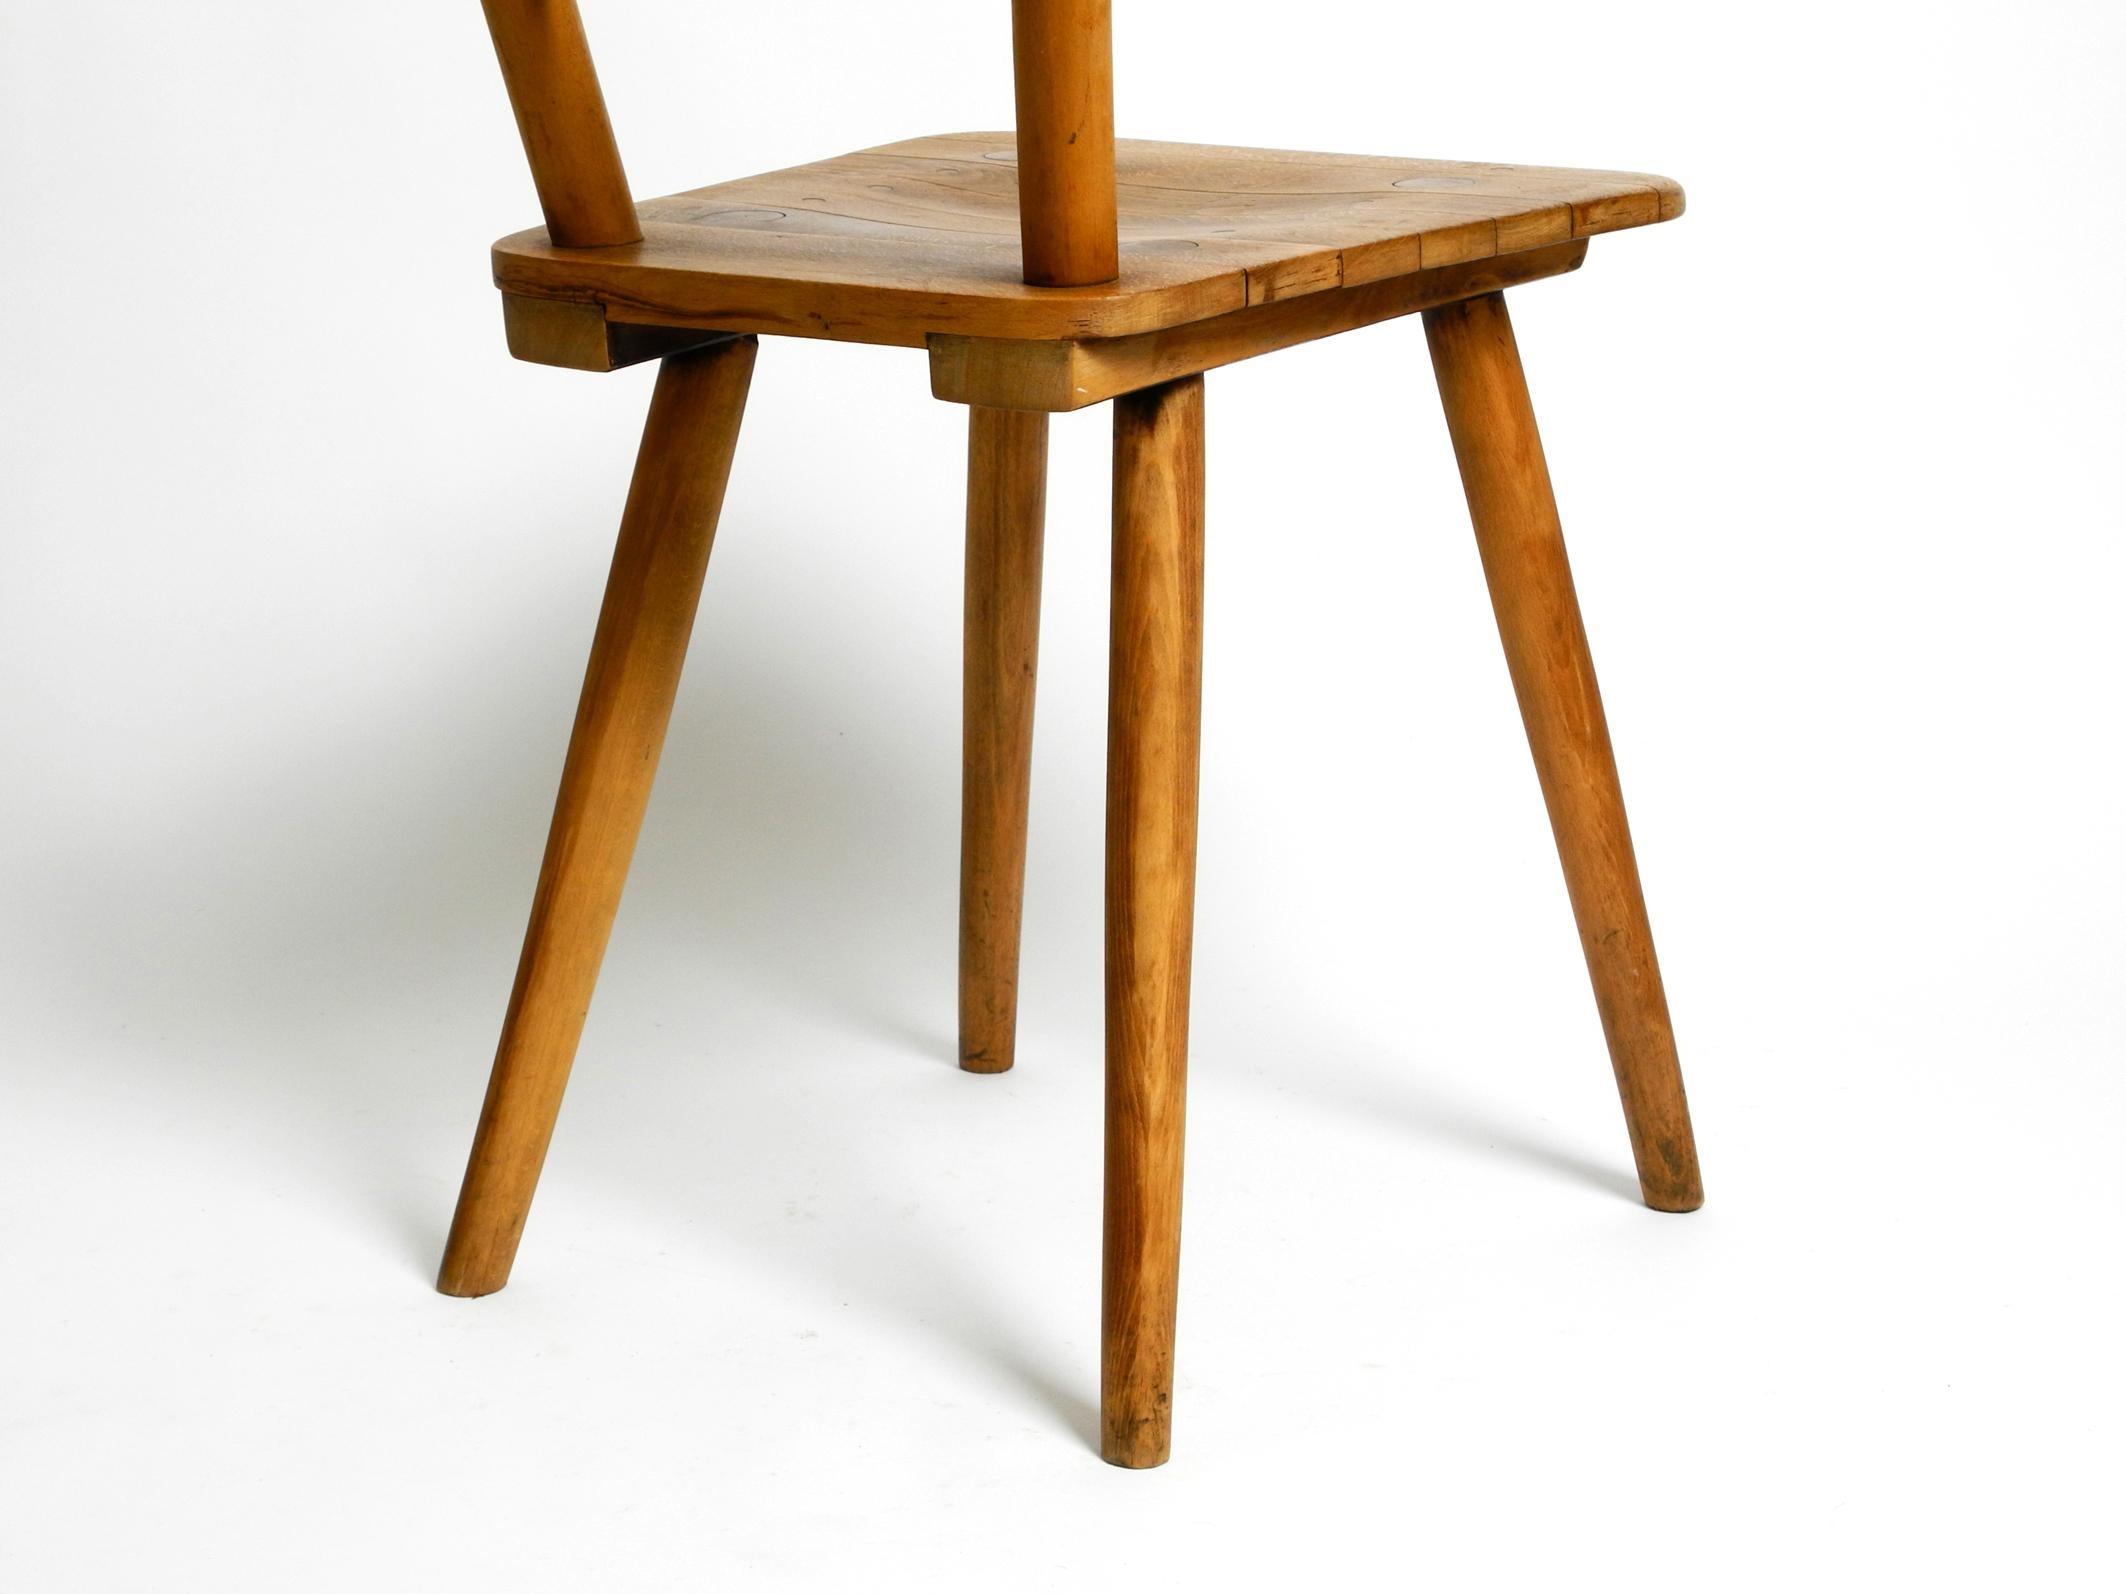 1930s Tübinger chair by the architect Prof. Adolf Gustav Schneck for Schäfer  For Sale 8